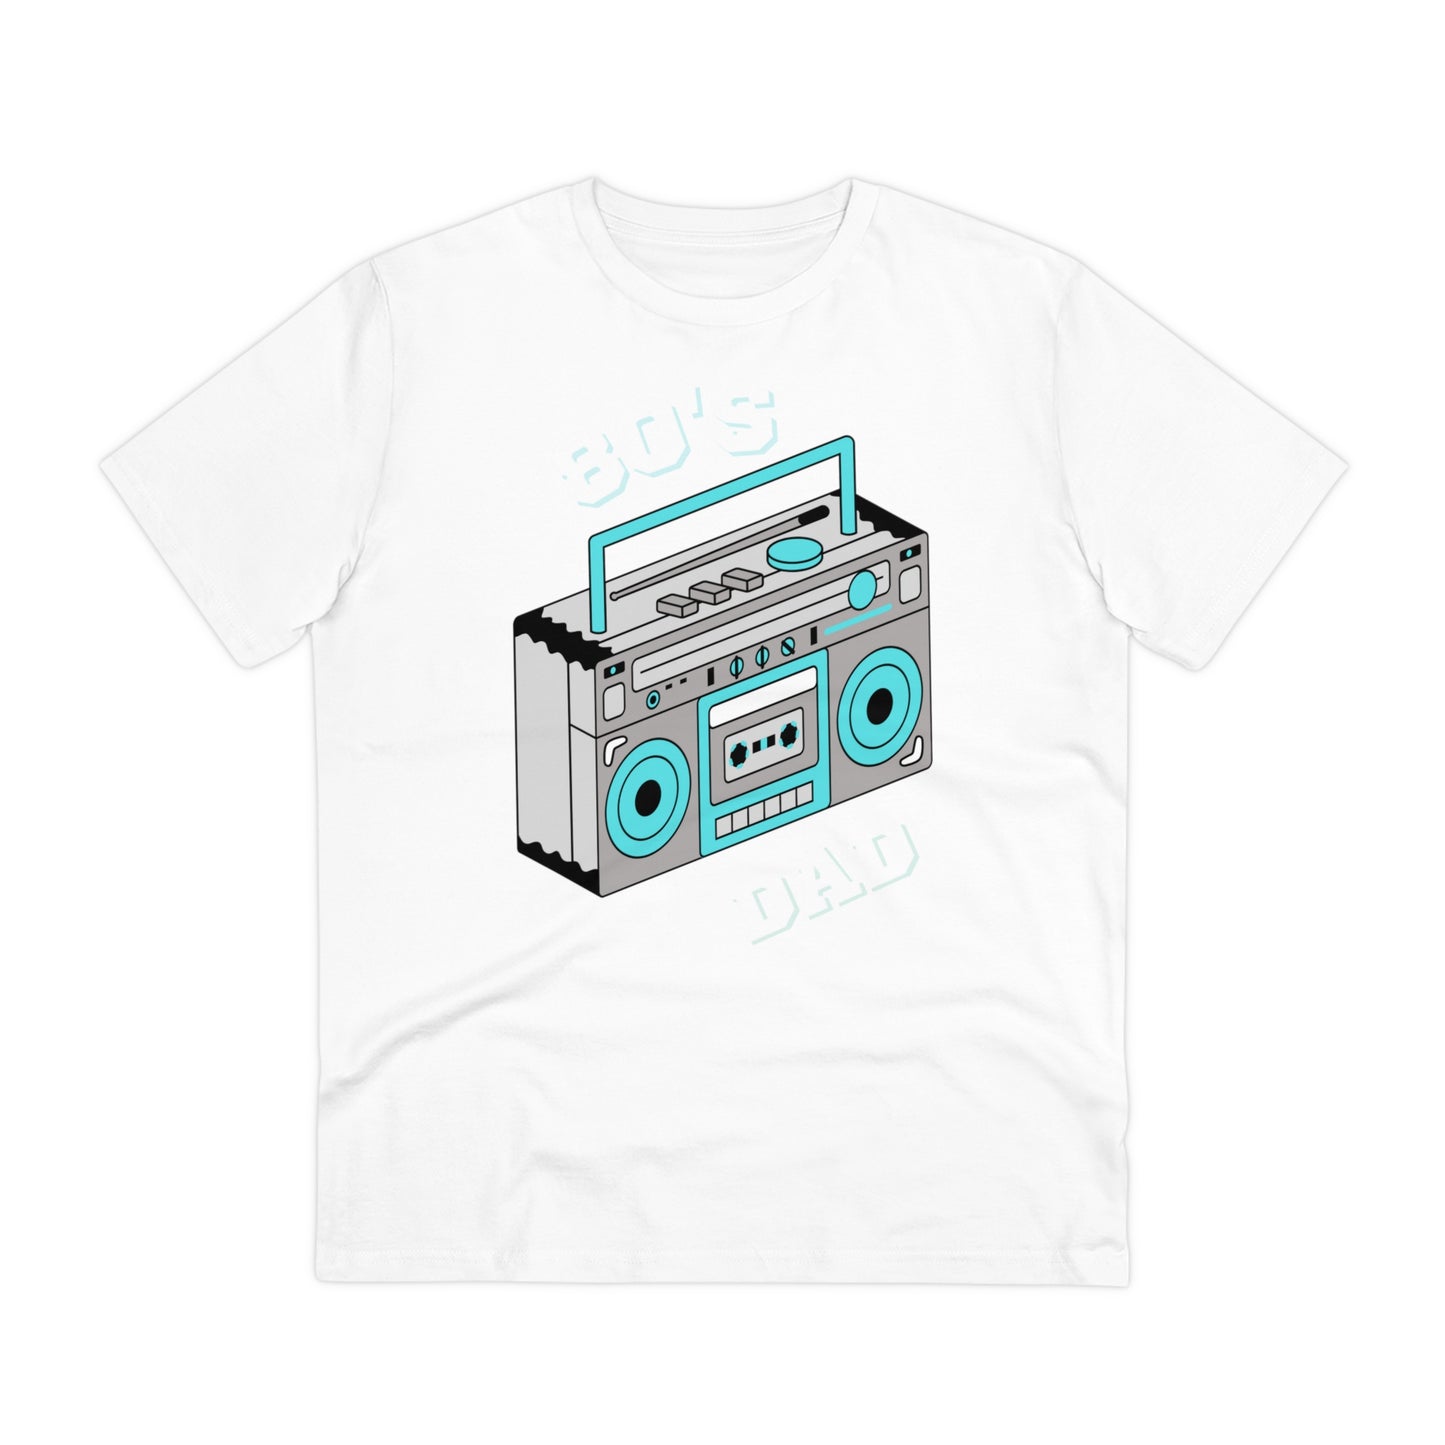 80's Dad Organic Creator T-shirt - Unisex